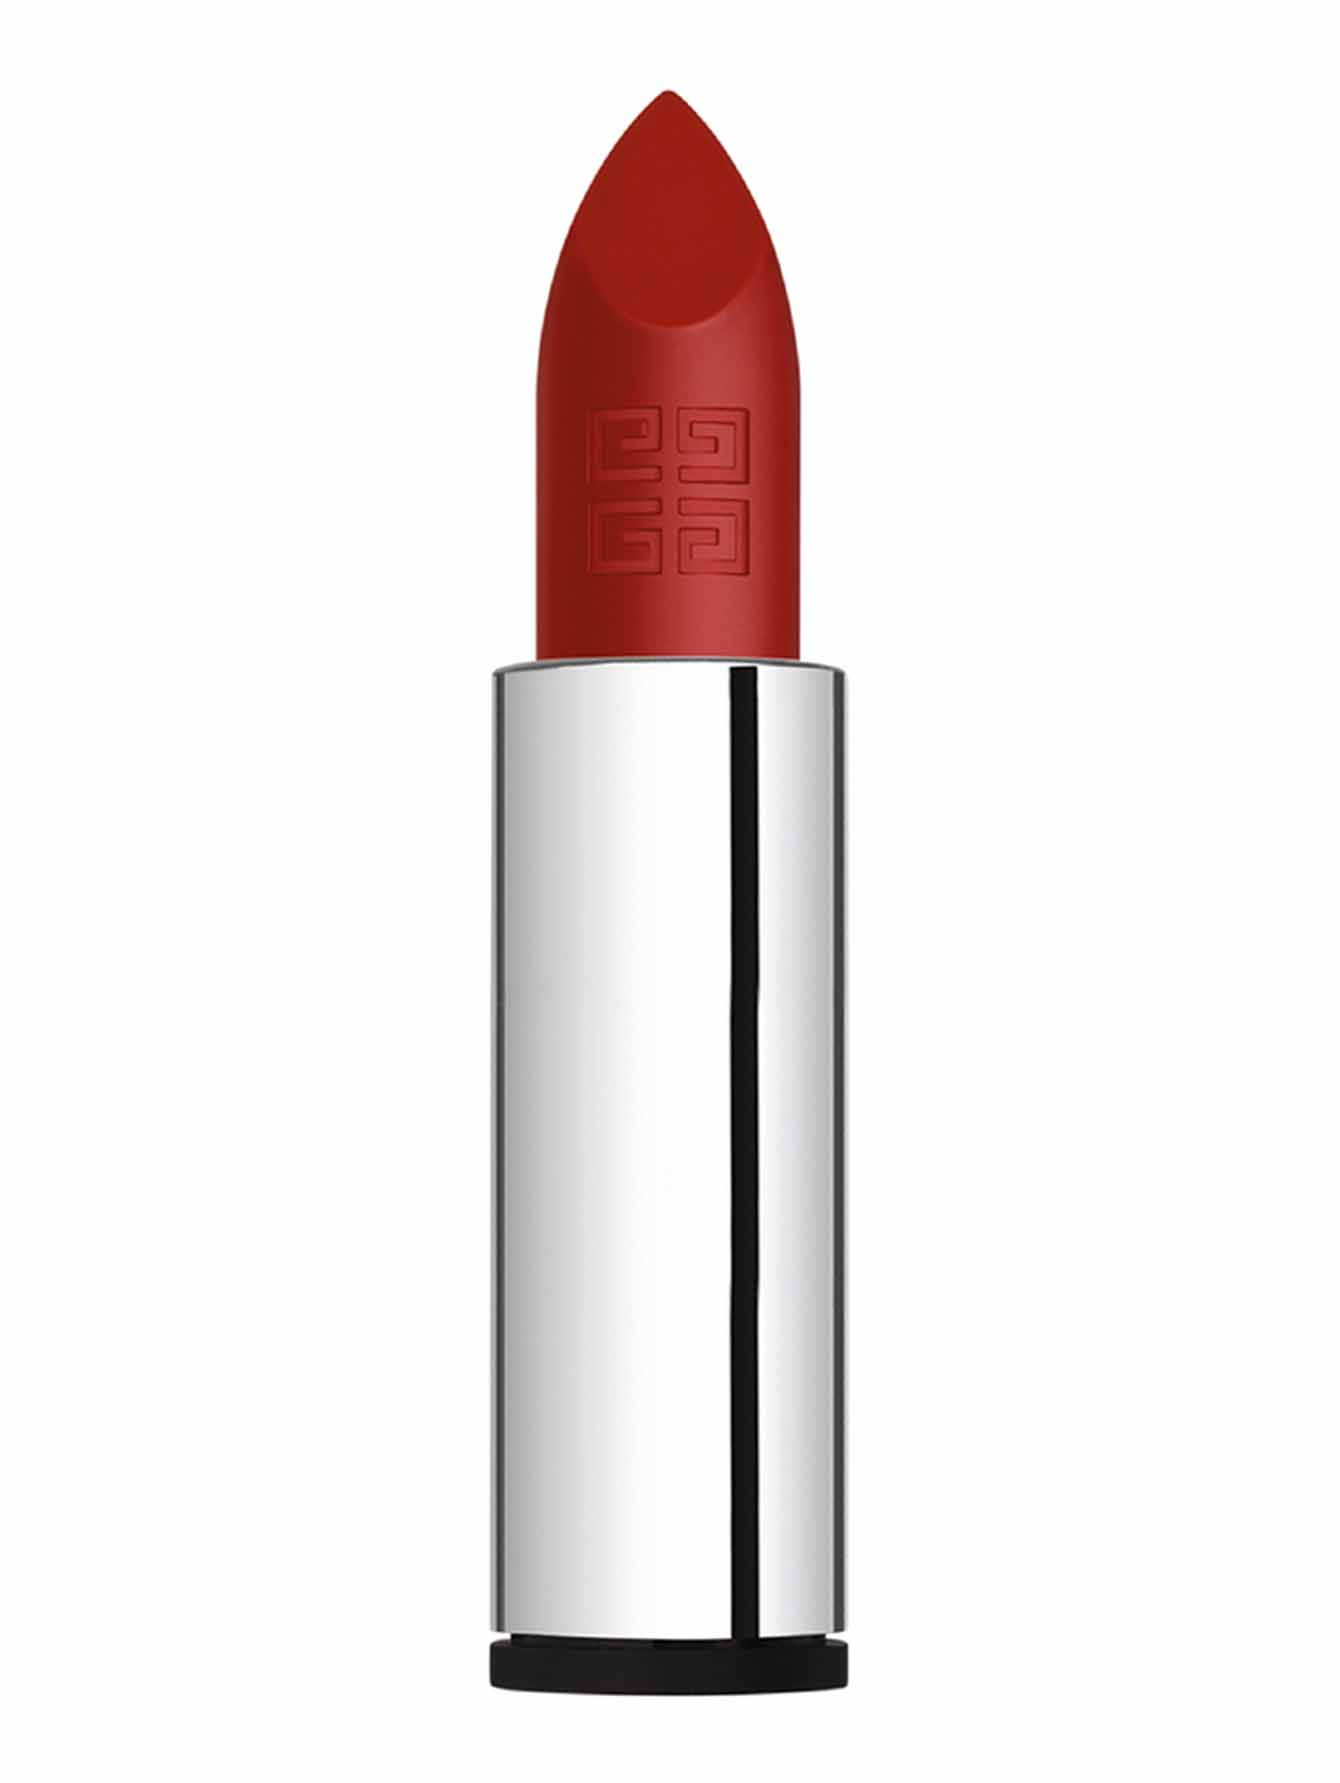 Le Rouge Sheer Velvet Легкая увлажняющая губная помада с мягким матовым финишем, без футляра - Общий вид